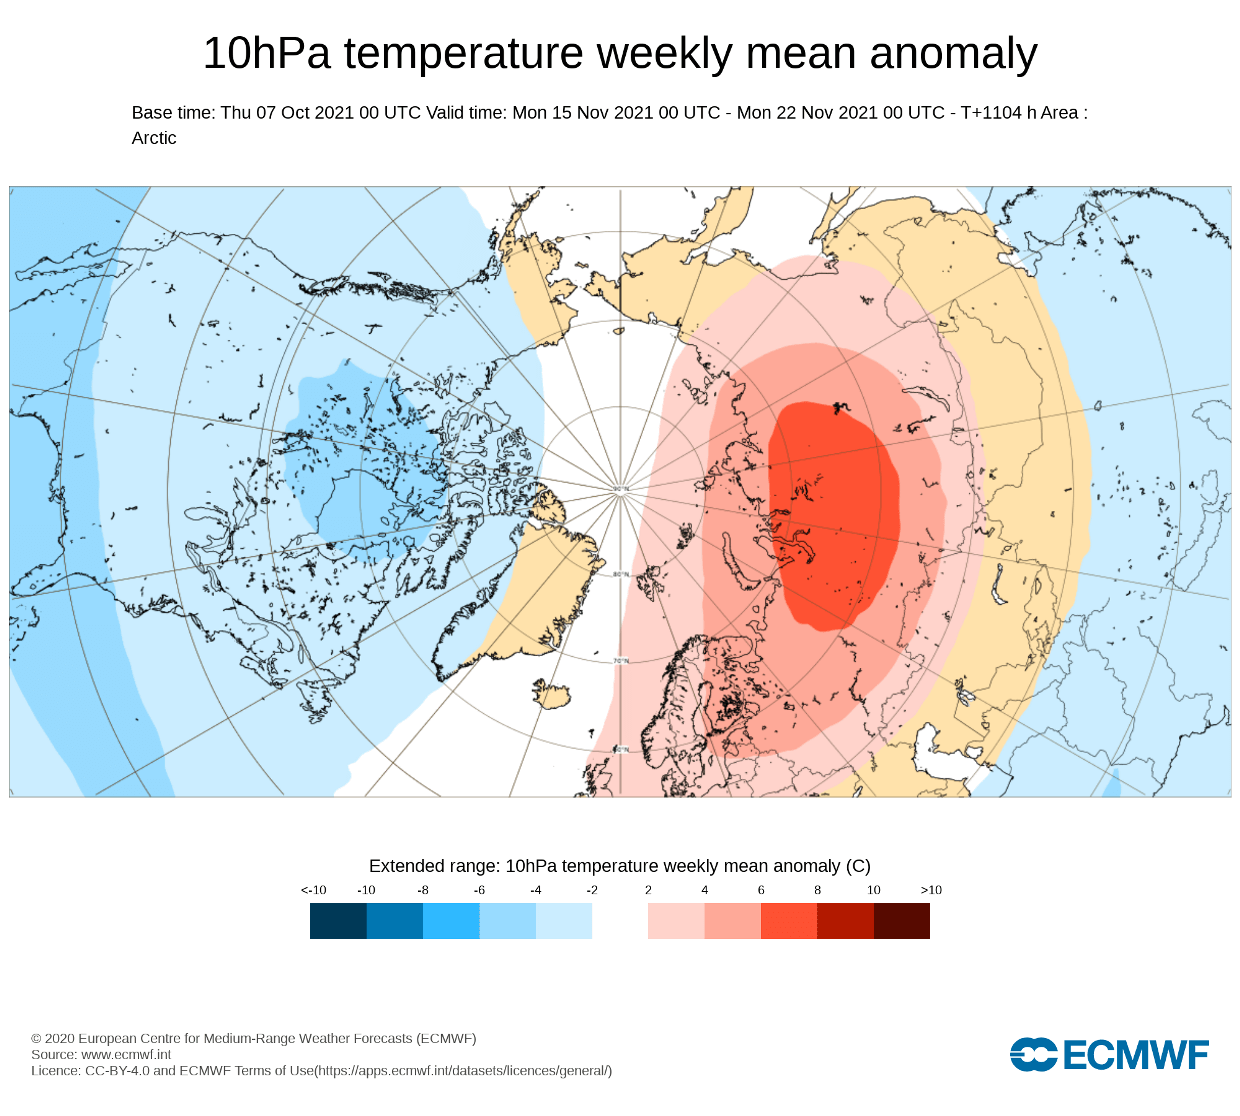 stratospheric-warming-forecast-ecmwf-november-cold-season-2021-2022